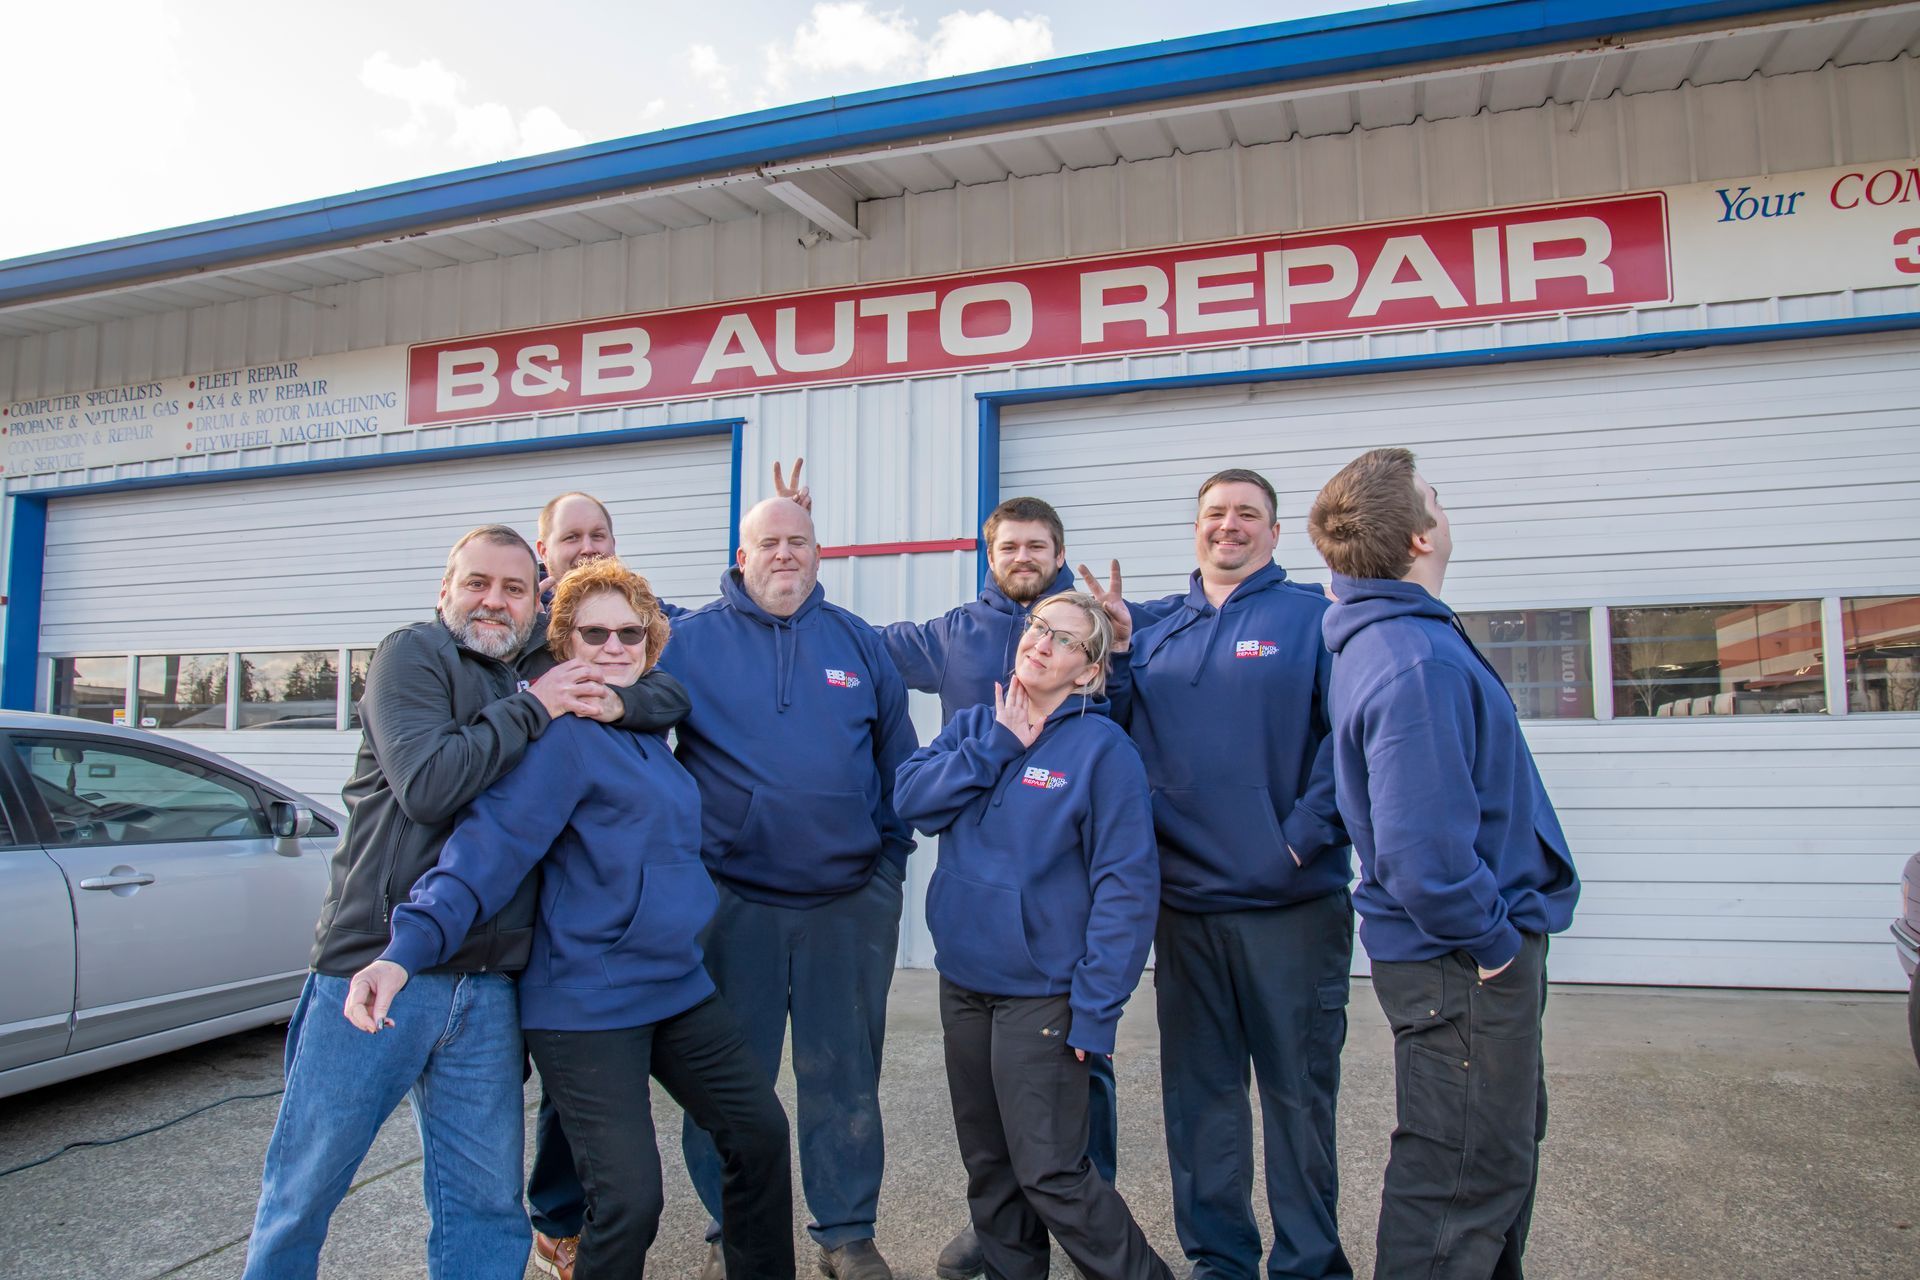 Funny Team Photo | B & B Auto Repair